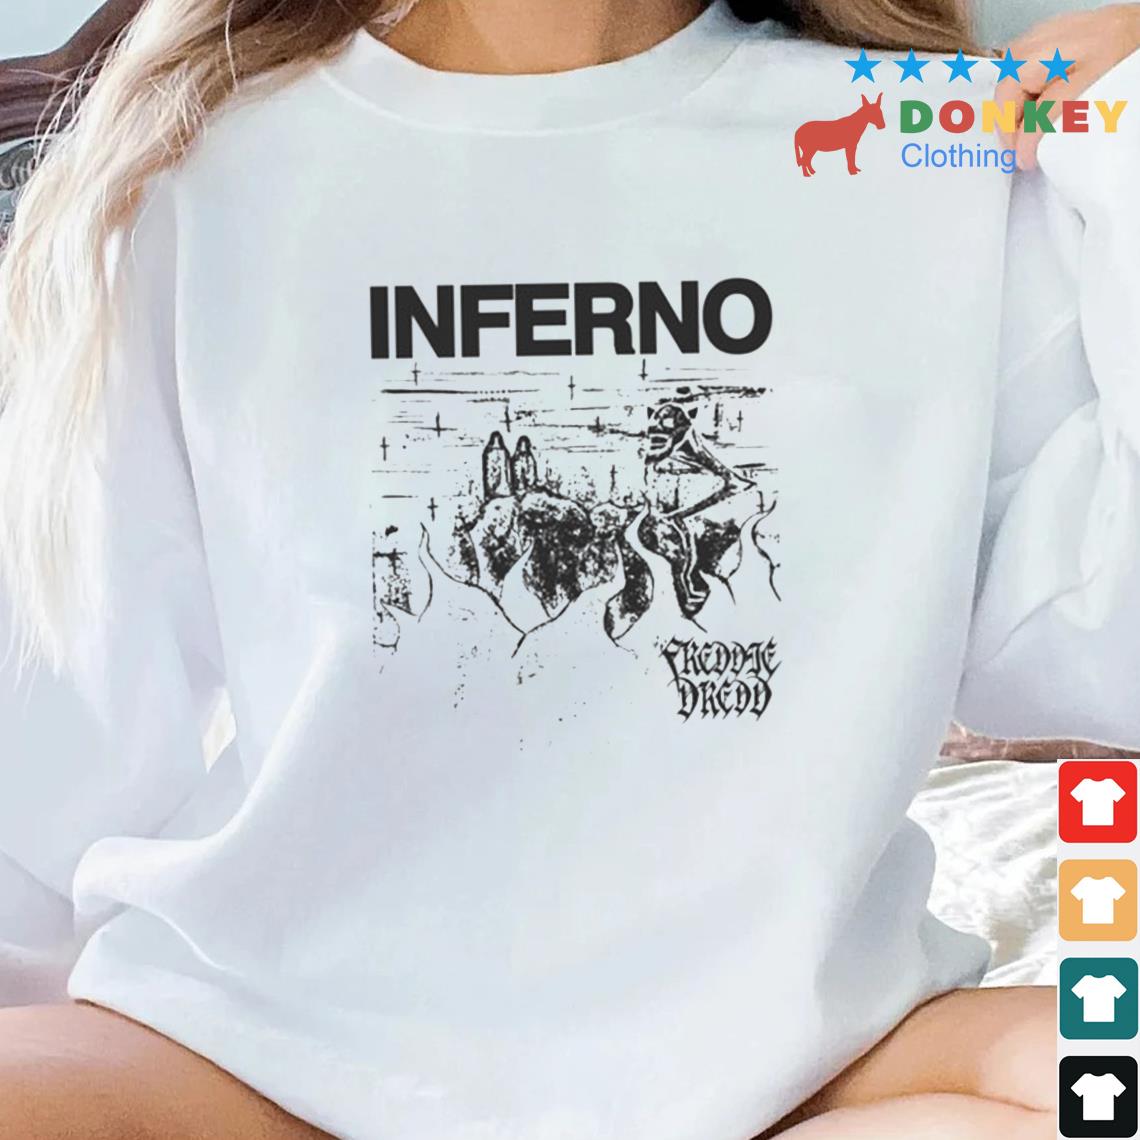 Freddie Dredd Inferno Shirt